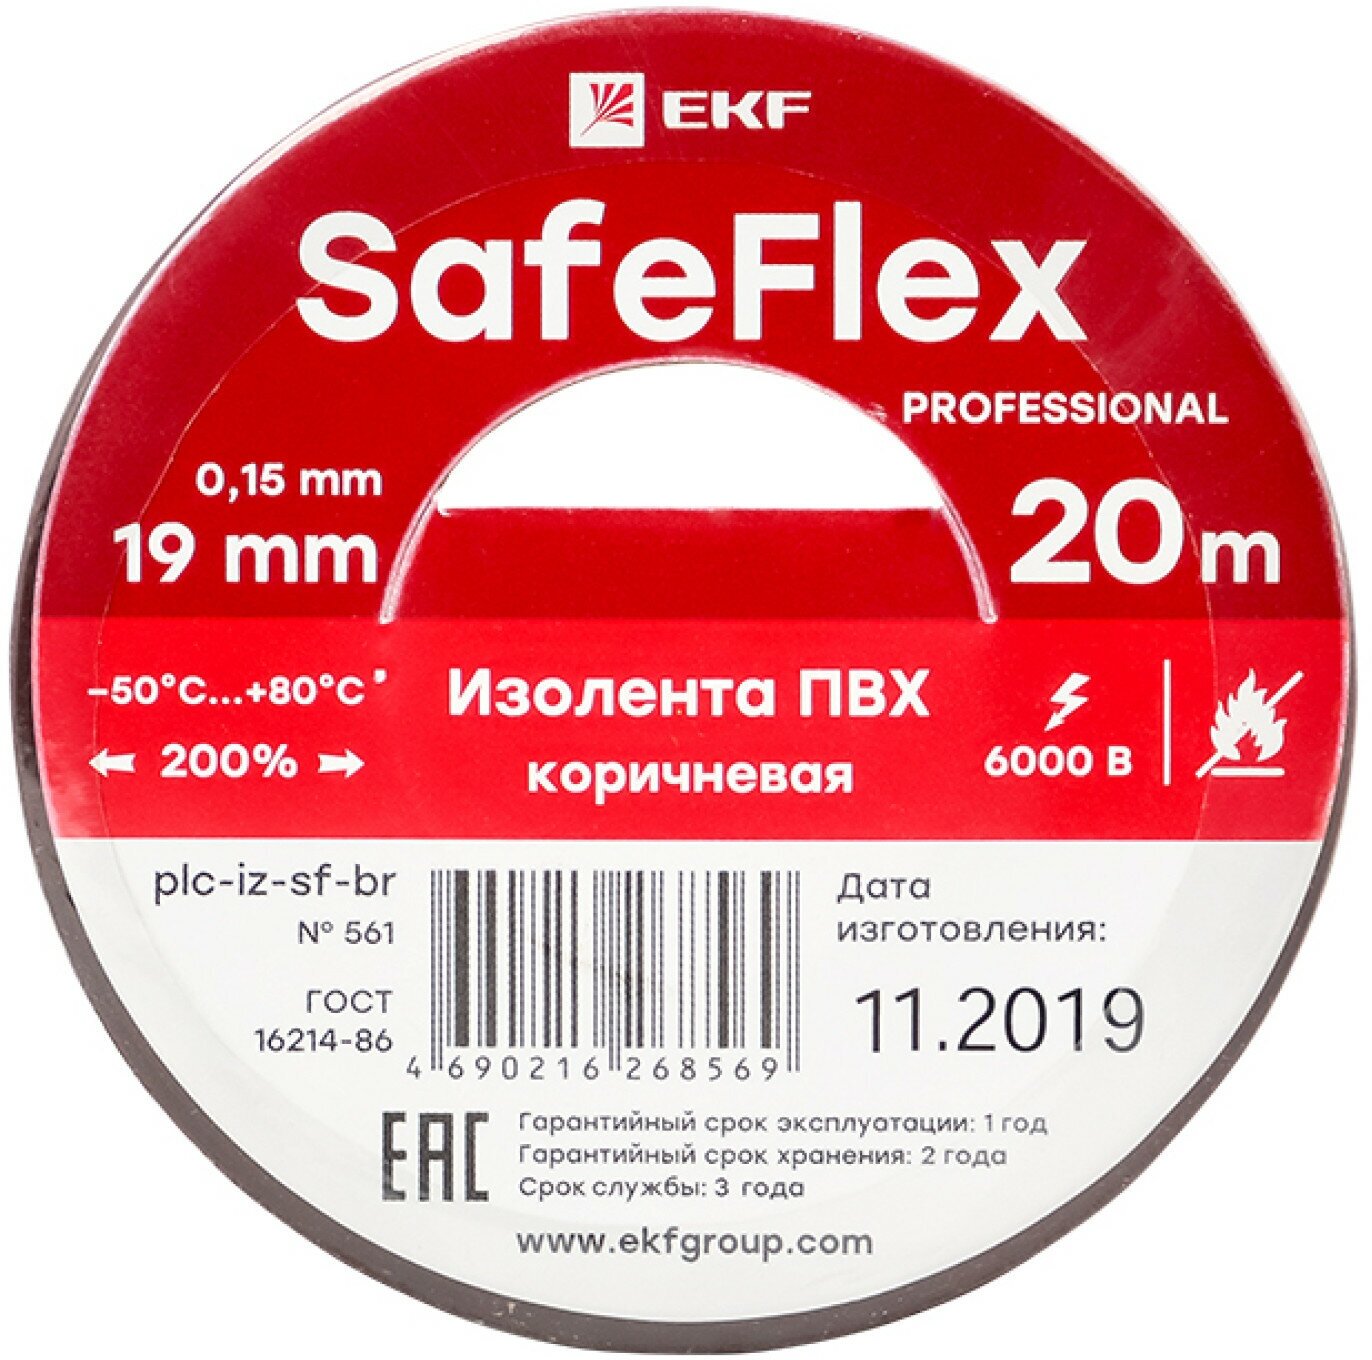 Изолента ПВХ черная 19мм 20м серии SafeFlex Упаковка (10 шт.) EKF - фото №6